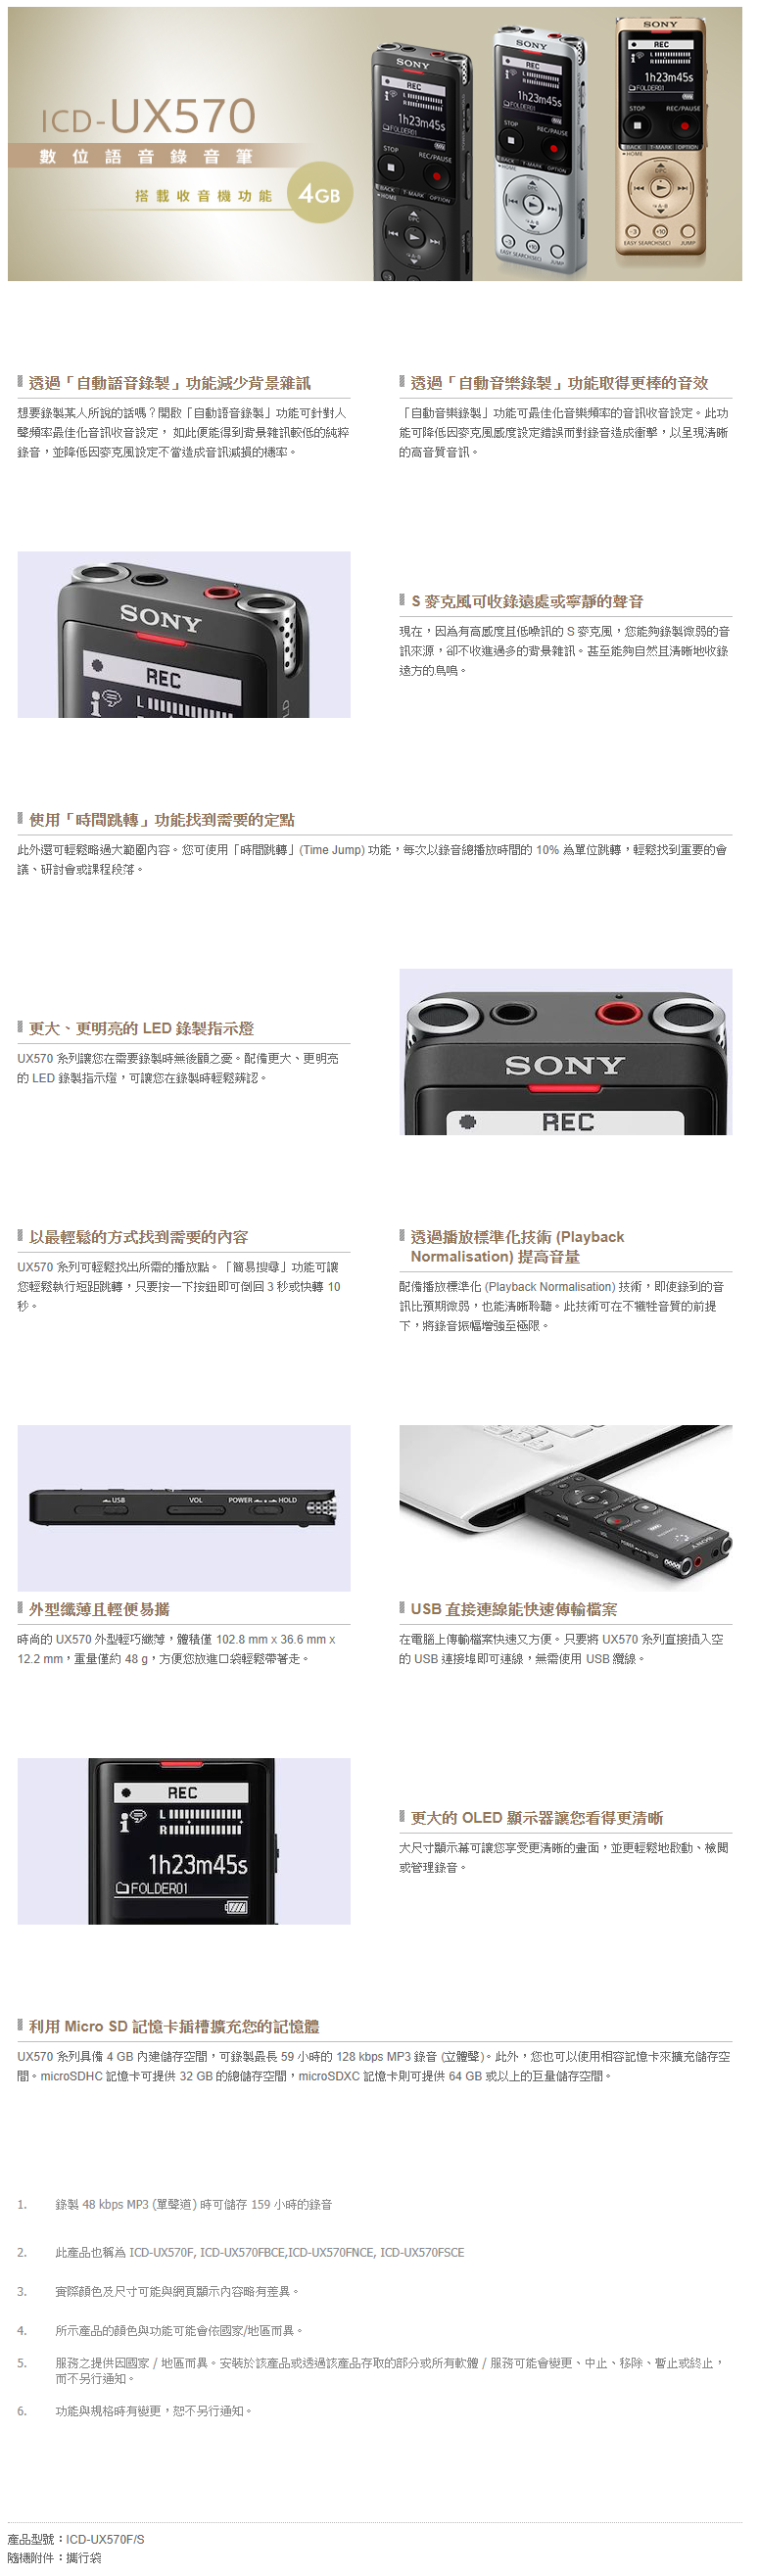 FireShot Capture 149 - ICD-UX570F - 完美焦點錄音筆 - Sony 台灣官方購物網站 - Sony Store, Online (Taiwan)_ - store.sony.com.tw